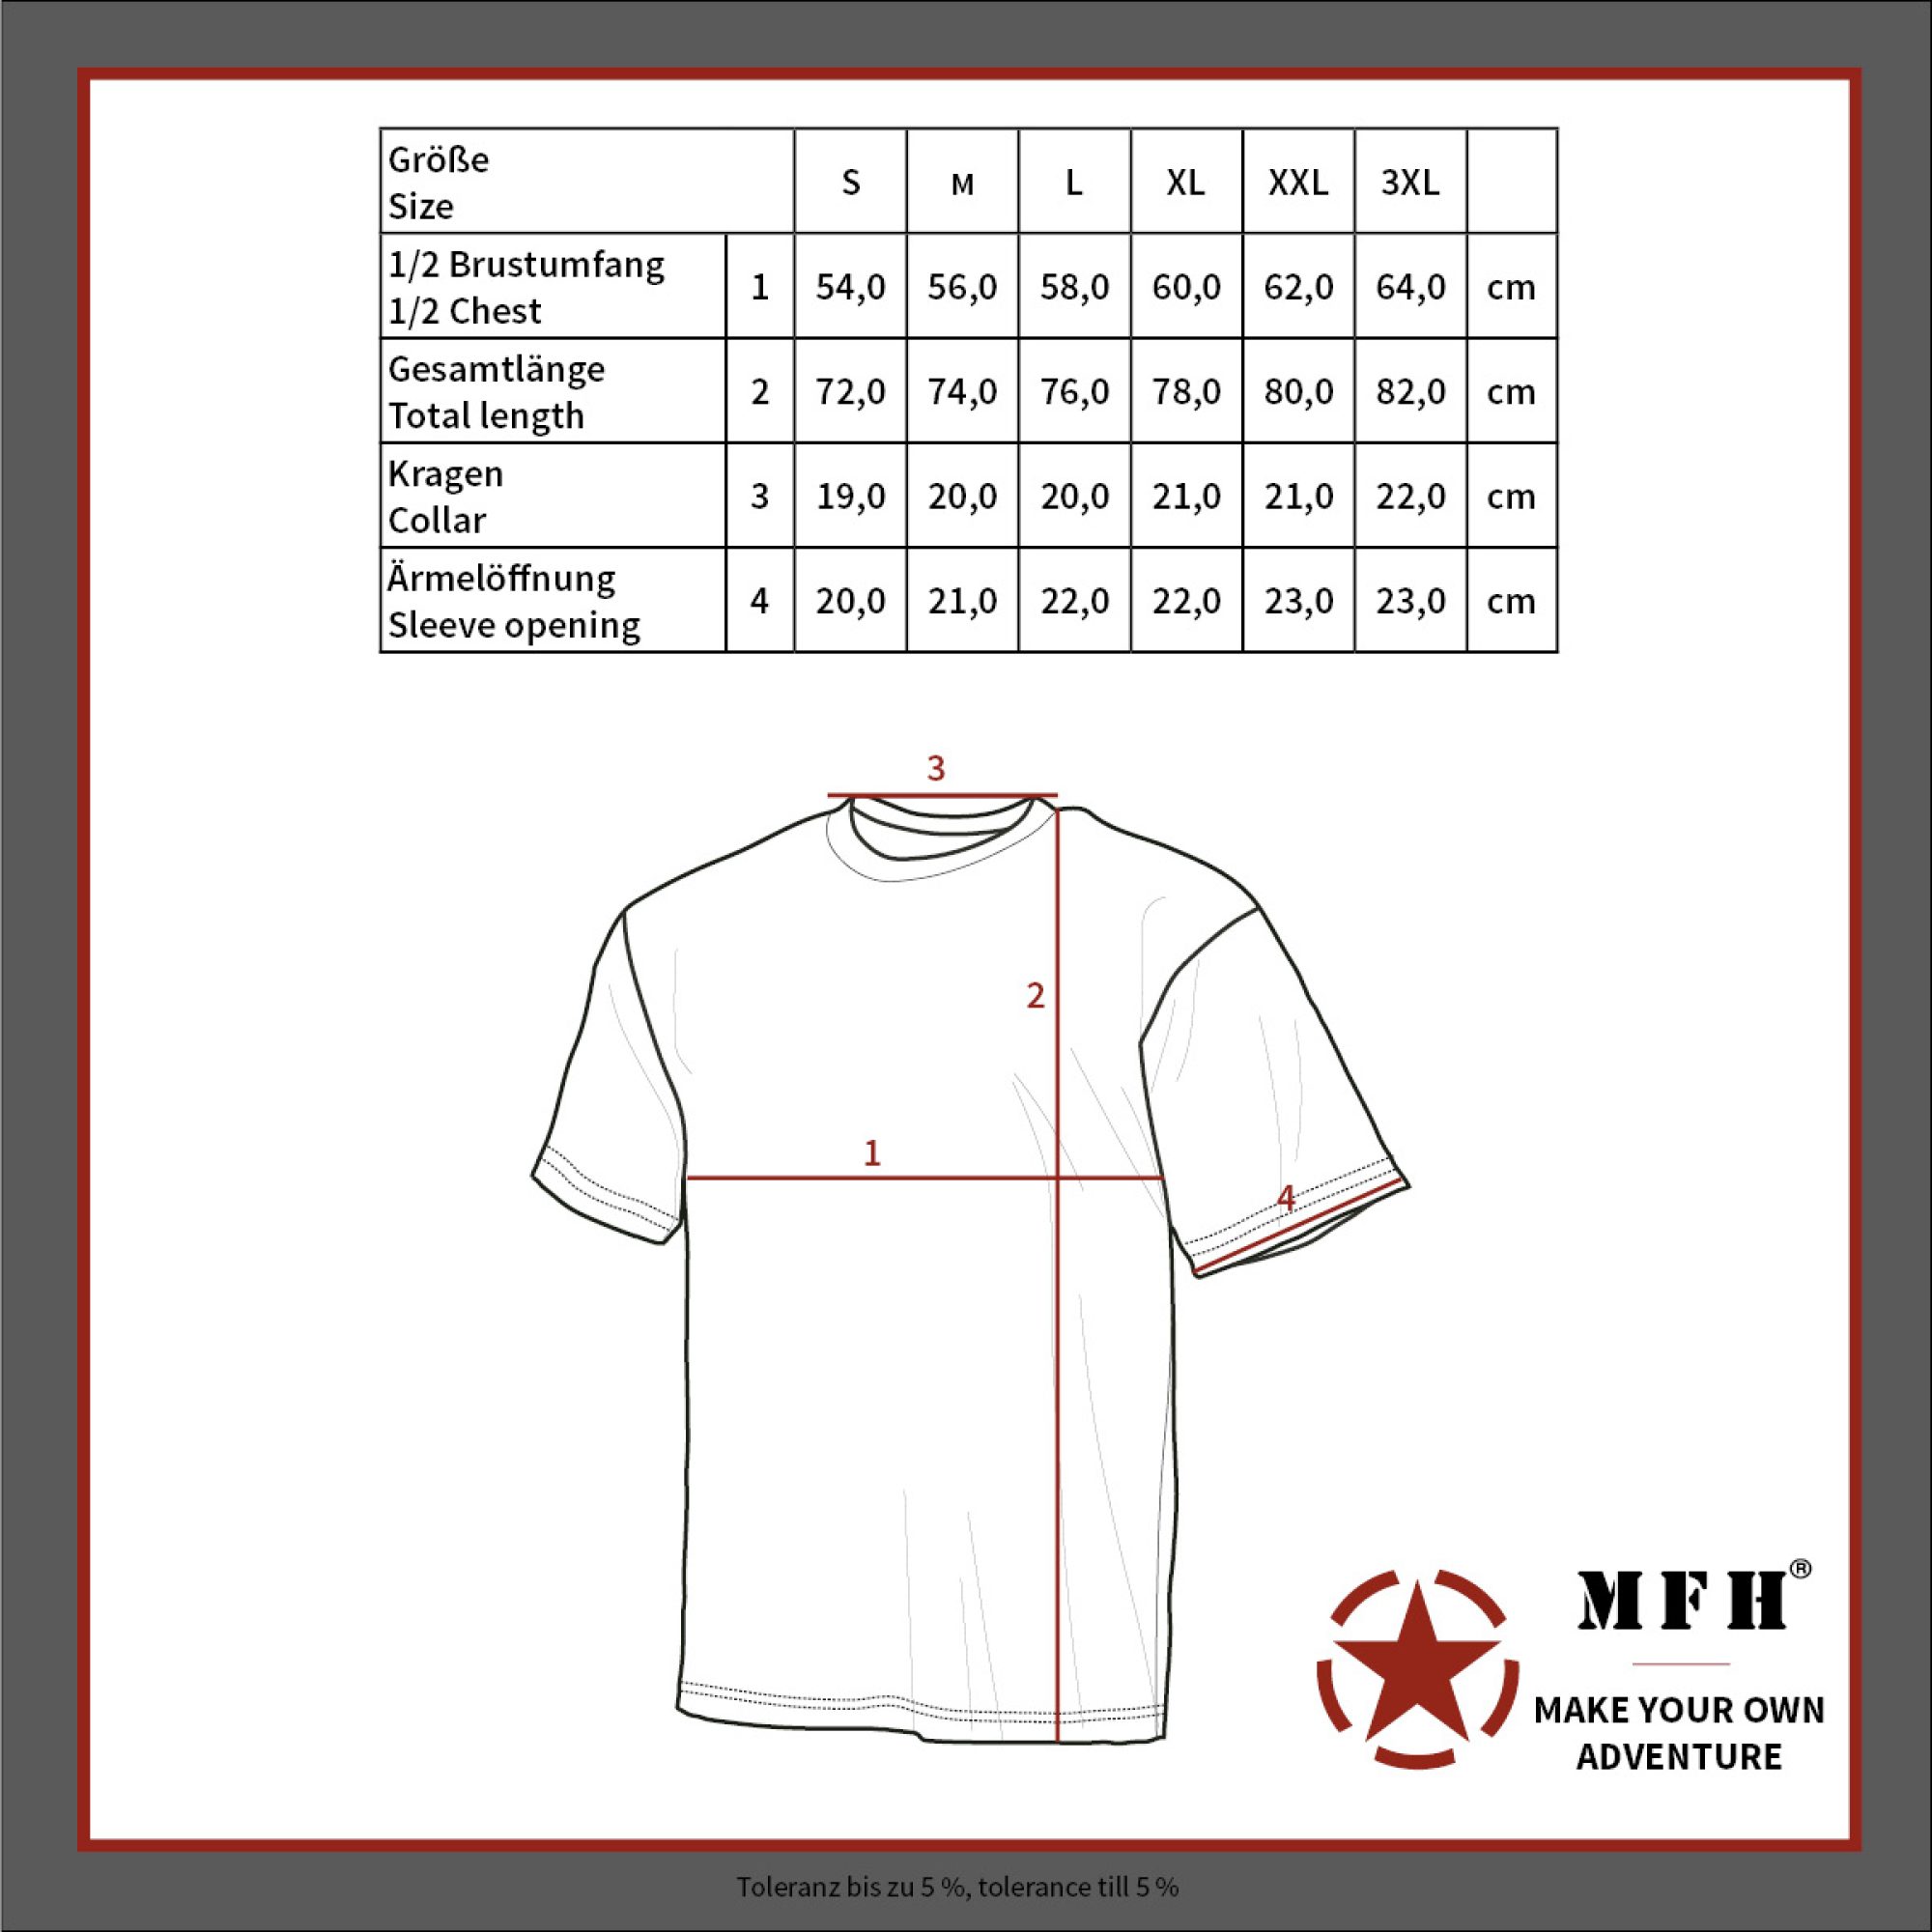 US T-Shirt,  halbarm, HDT-camo FG,  170 g/m²